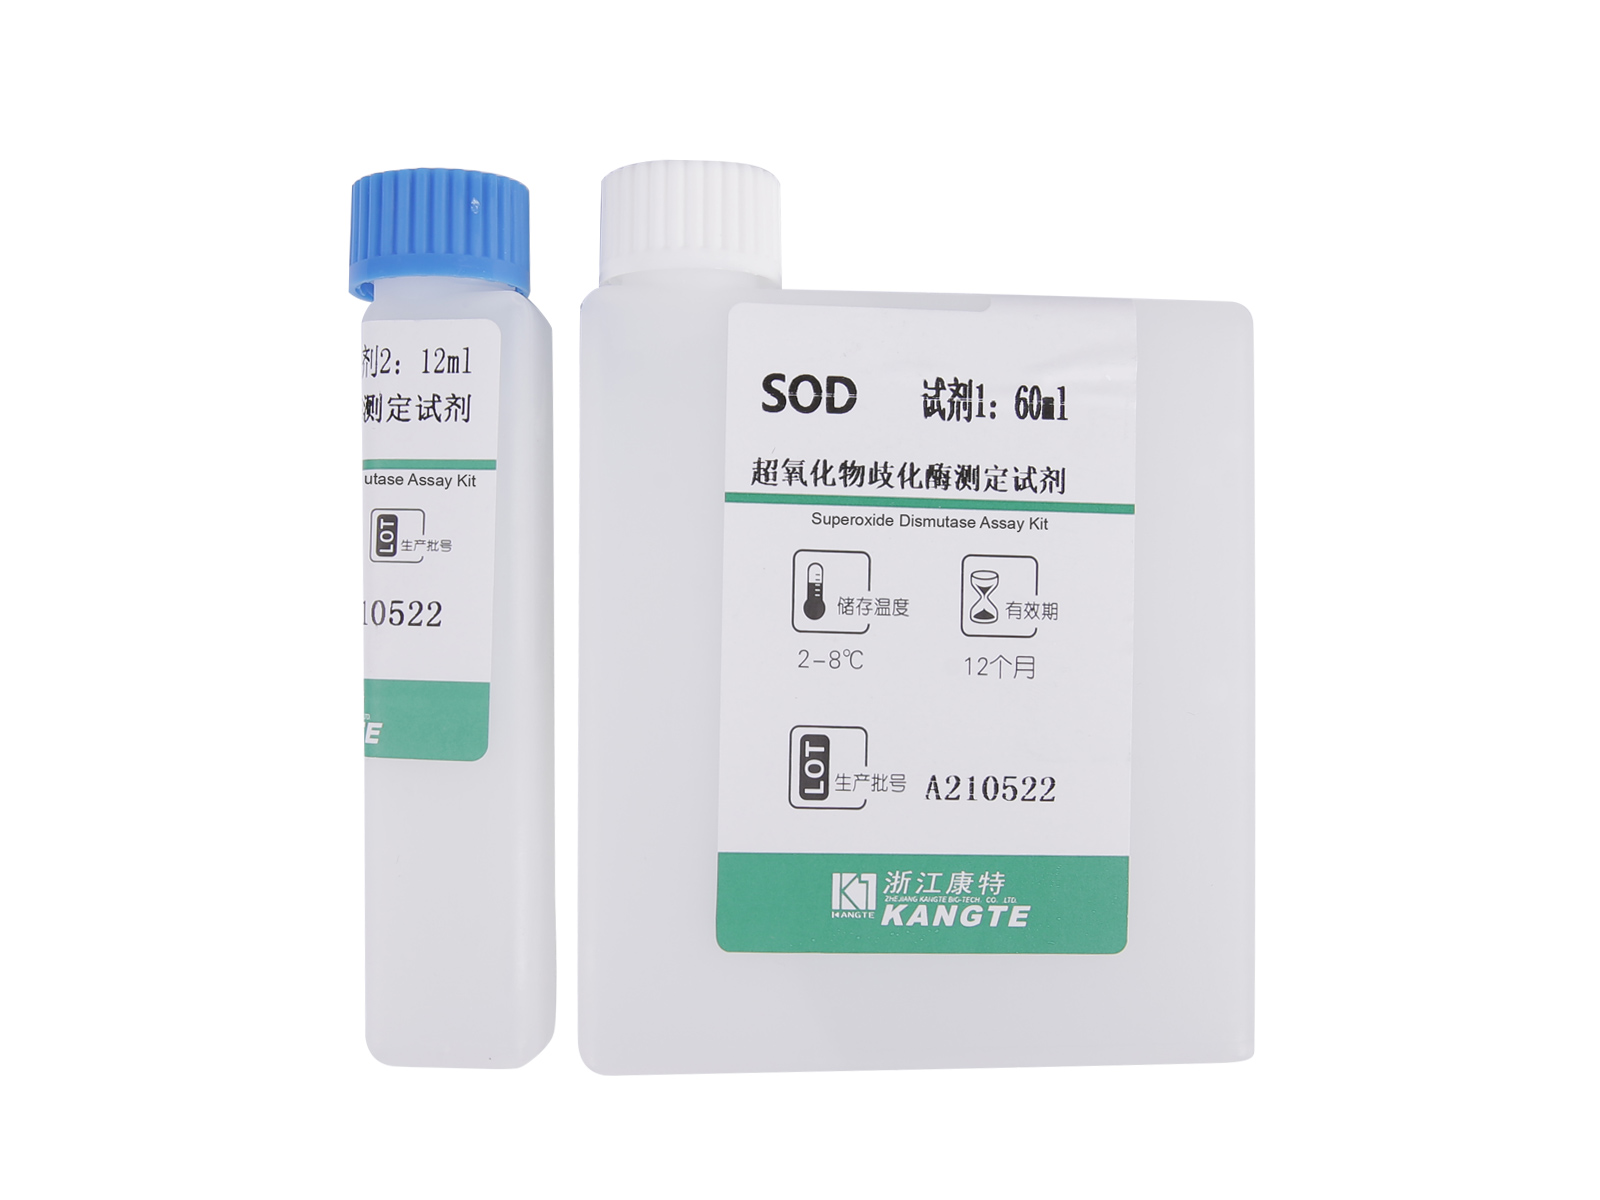 【SOD】 Kit de ensaio de superóxido dismutase (método colorimétrico)